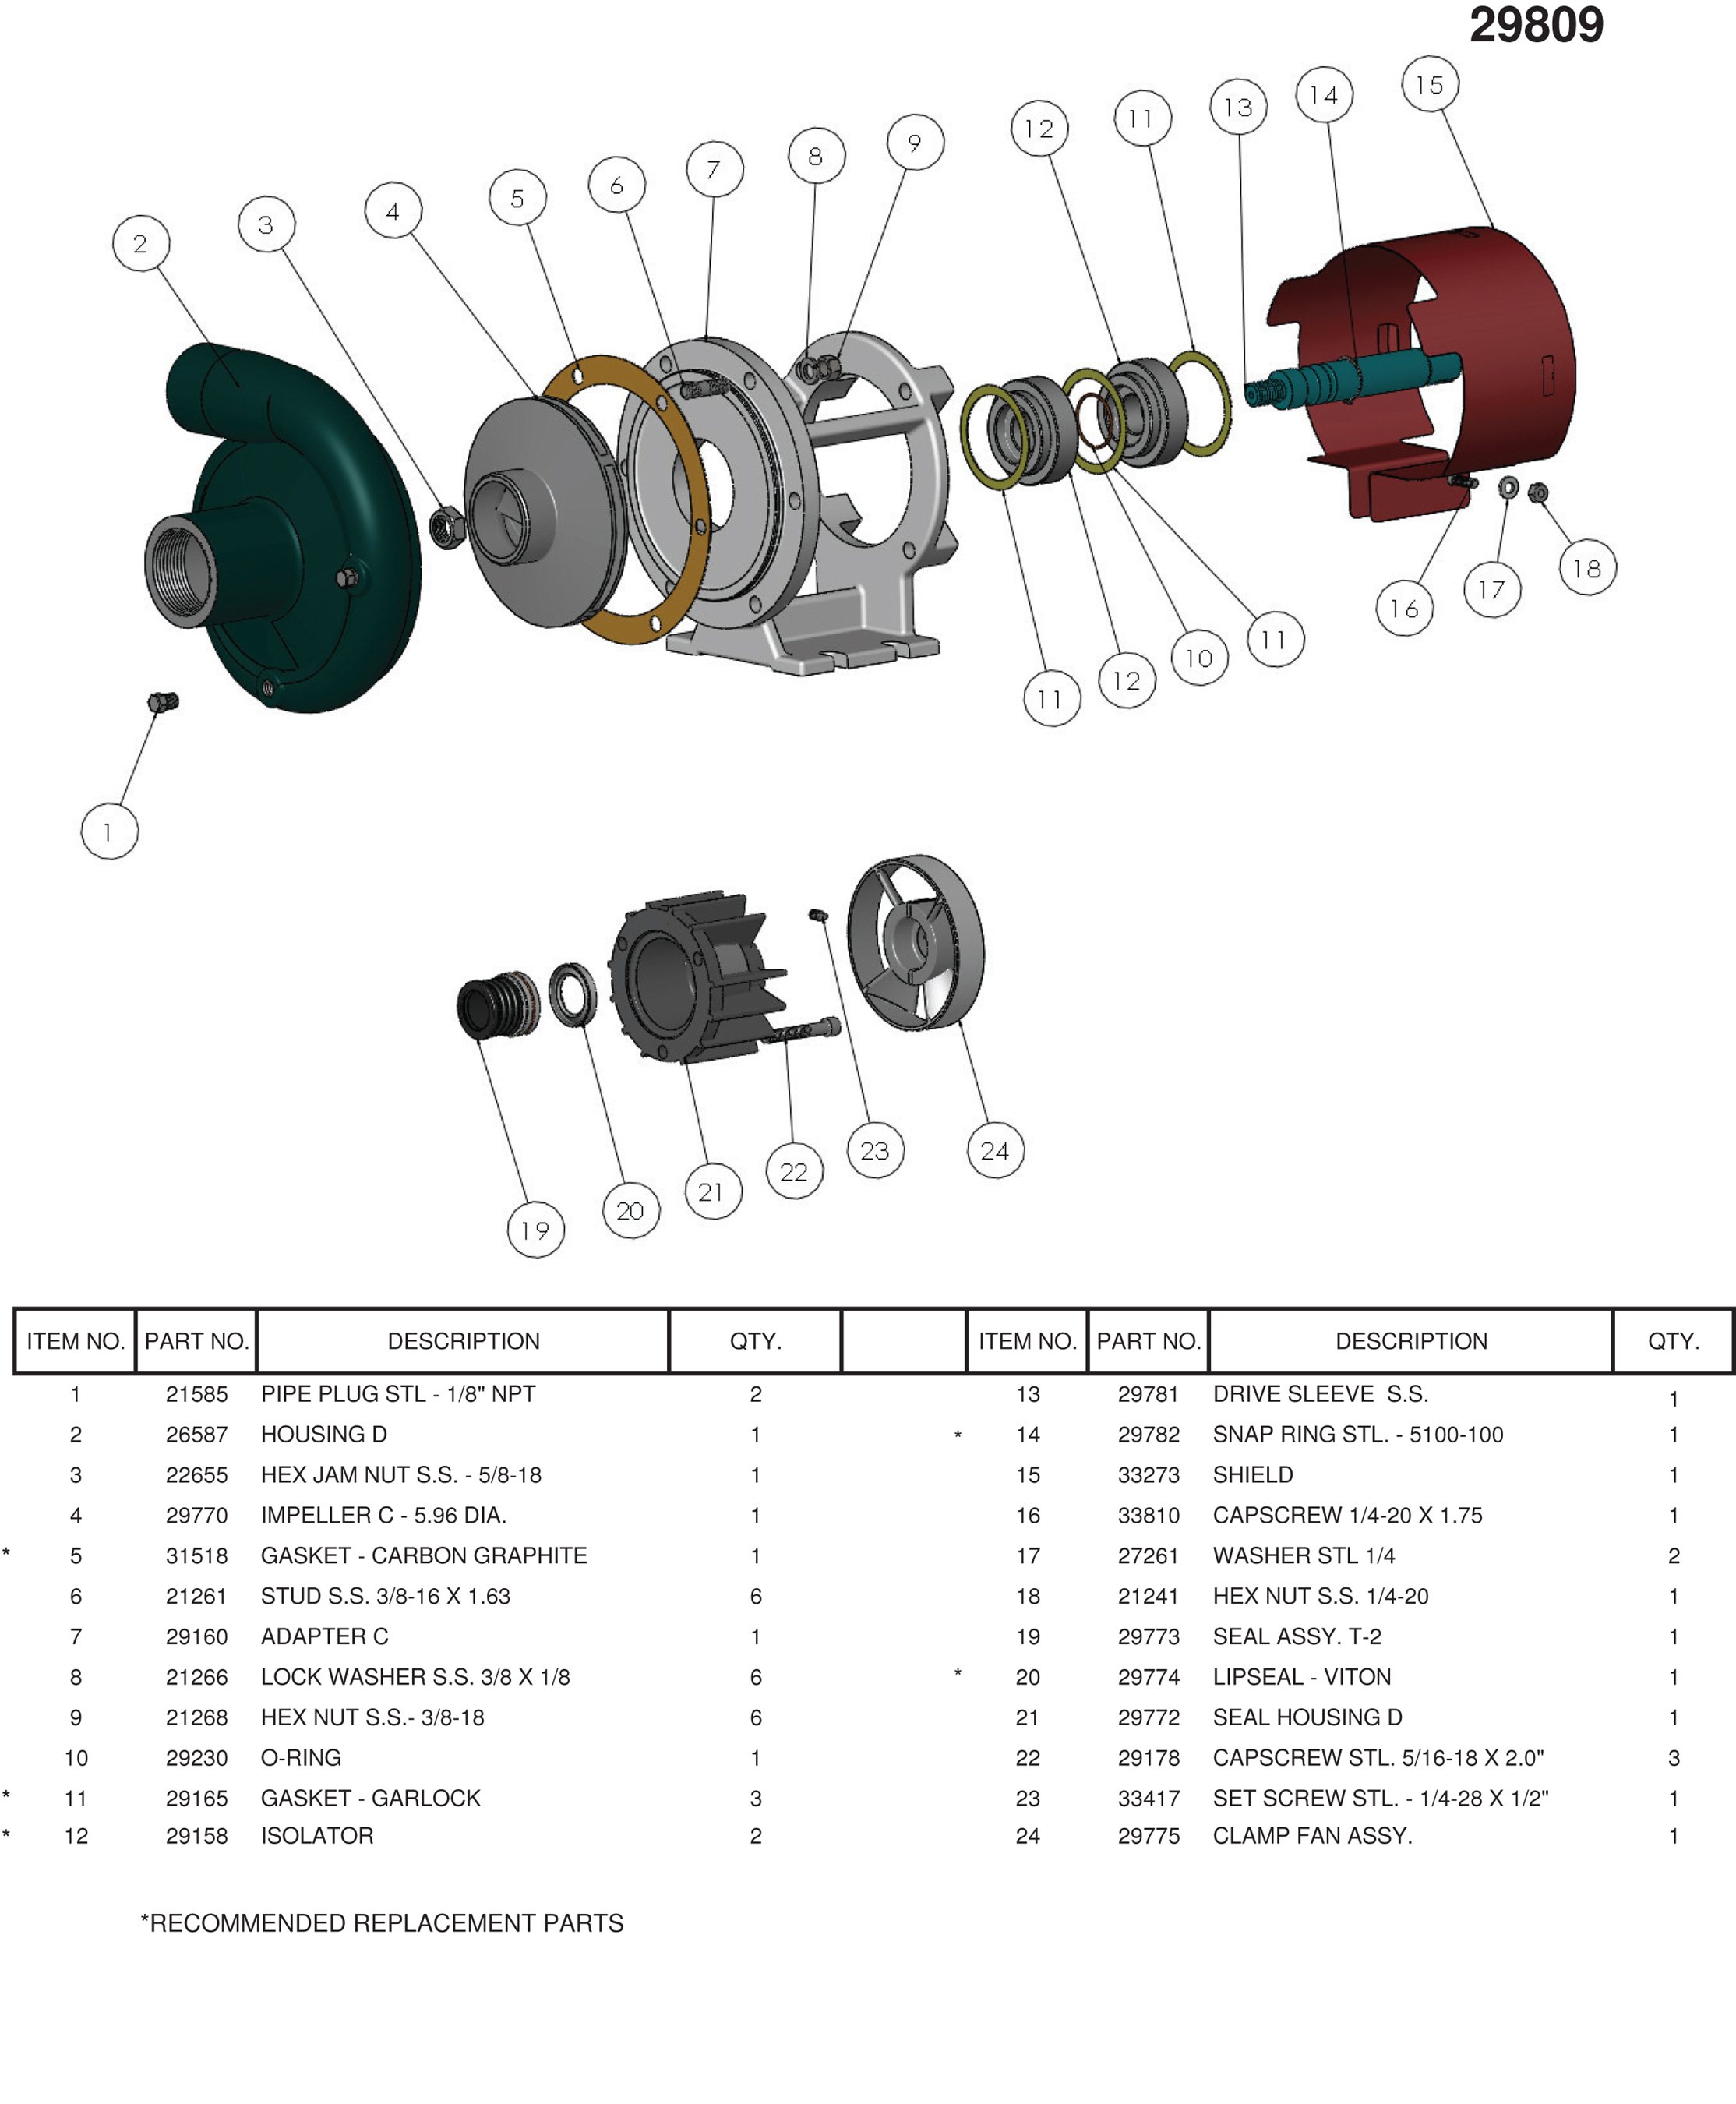 hto-120_parts-list-29809